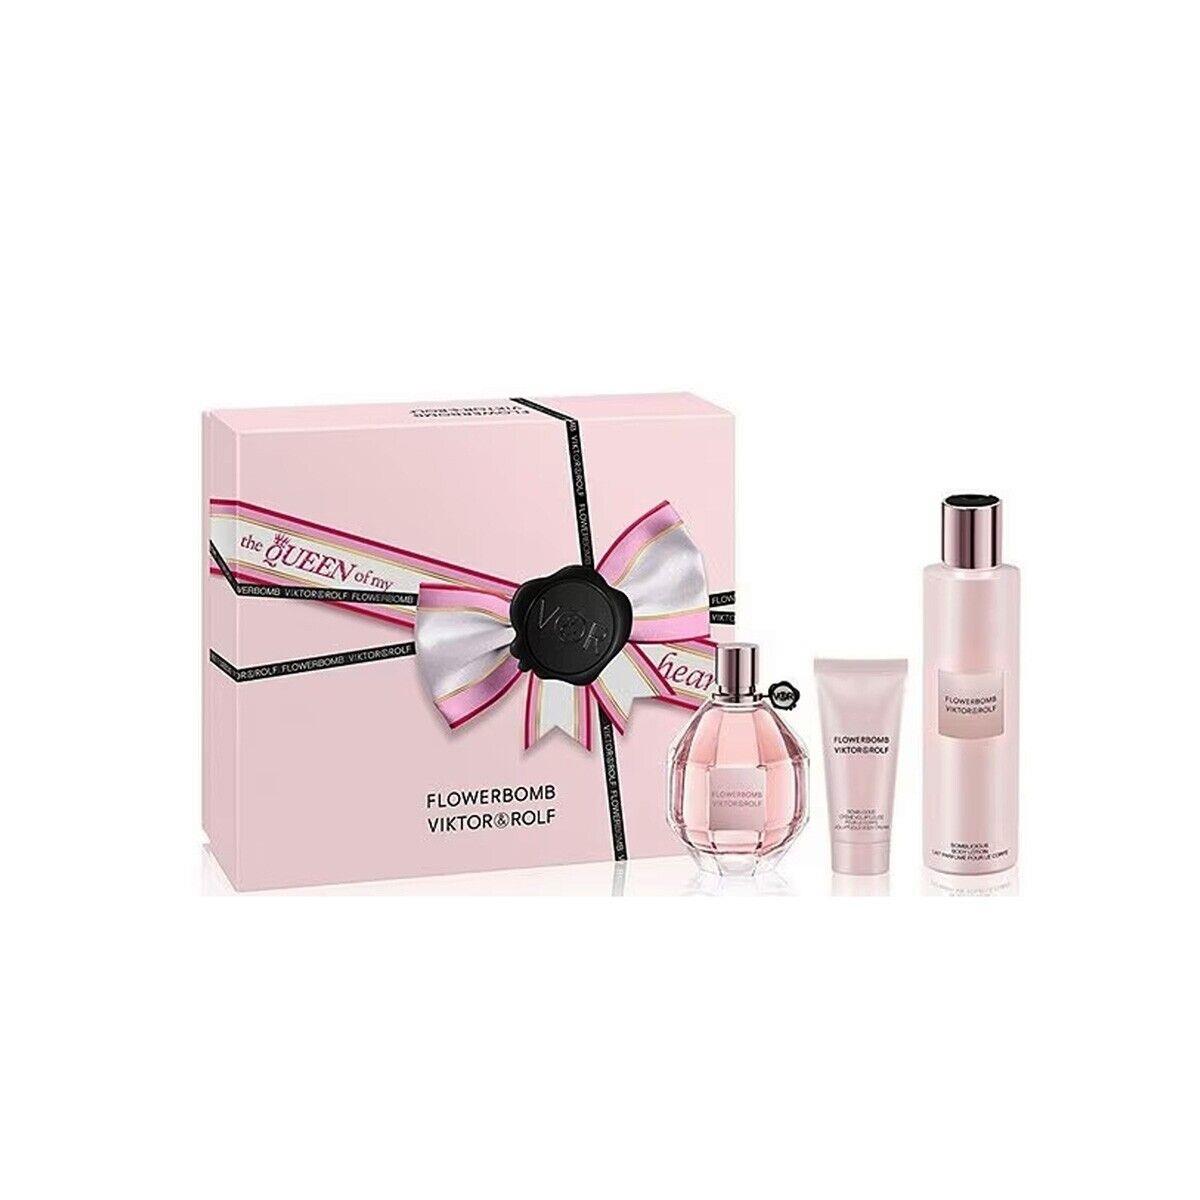 Viktor Rolf Flowerbomb Eau De Parfum Gift Set - Edp + Body Lotion + Body Cream